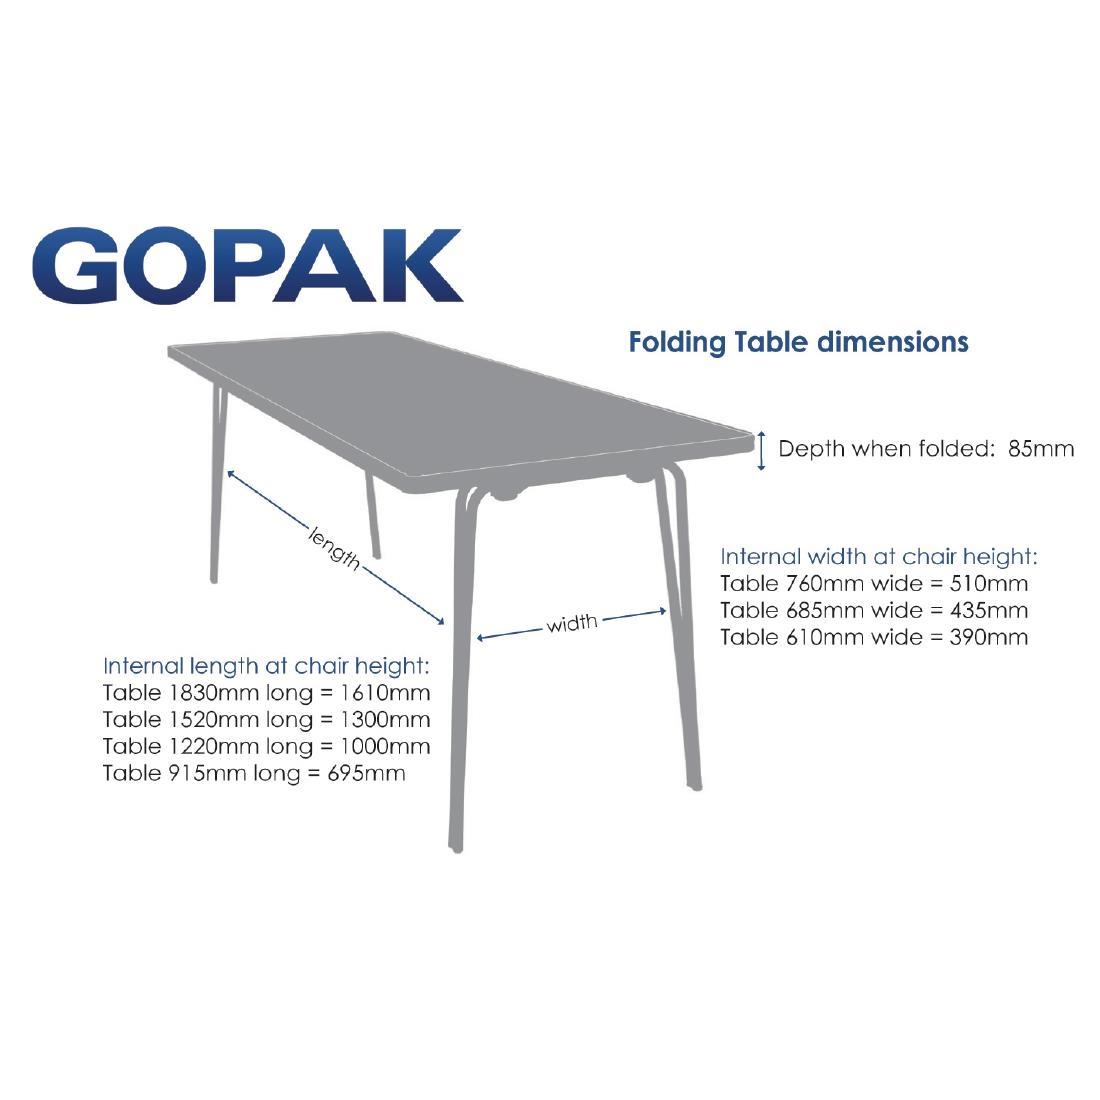 Gopak Contour Folding Table Teak 6ft - DM940  - 2